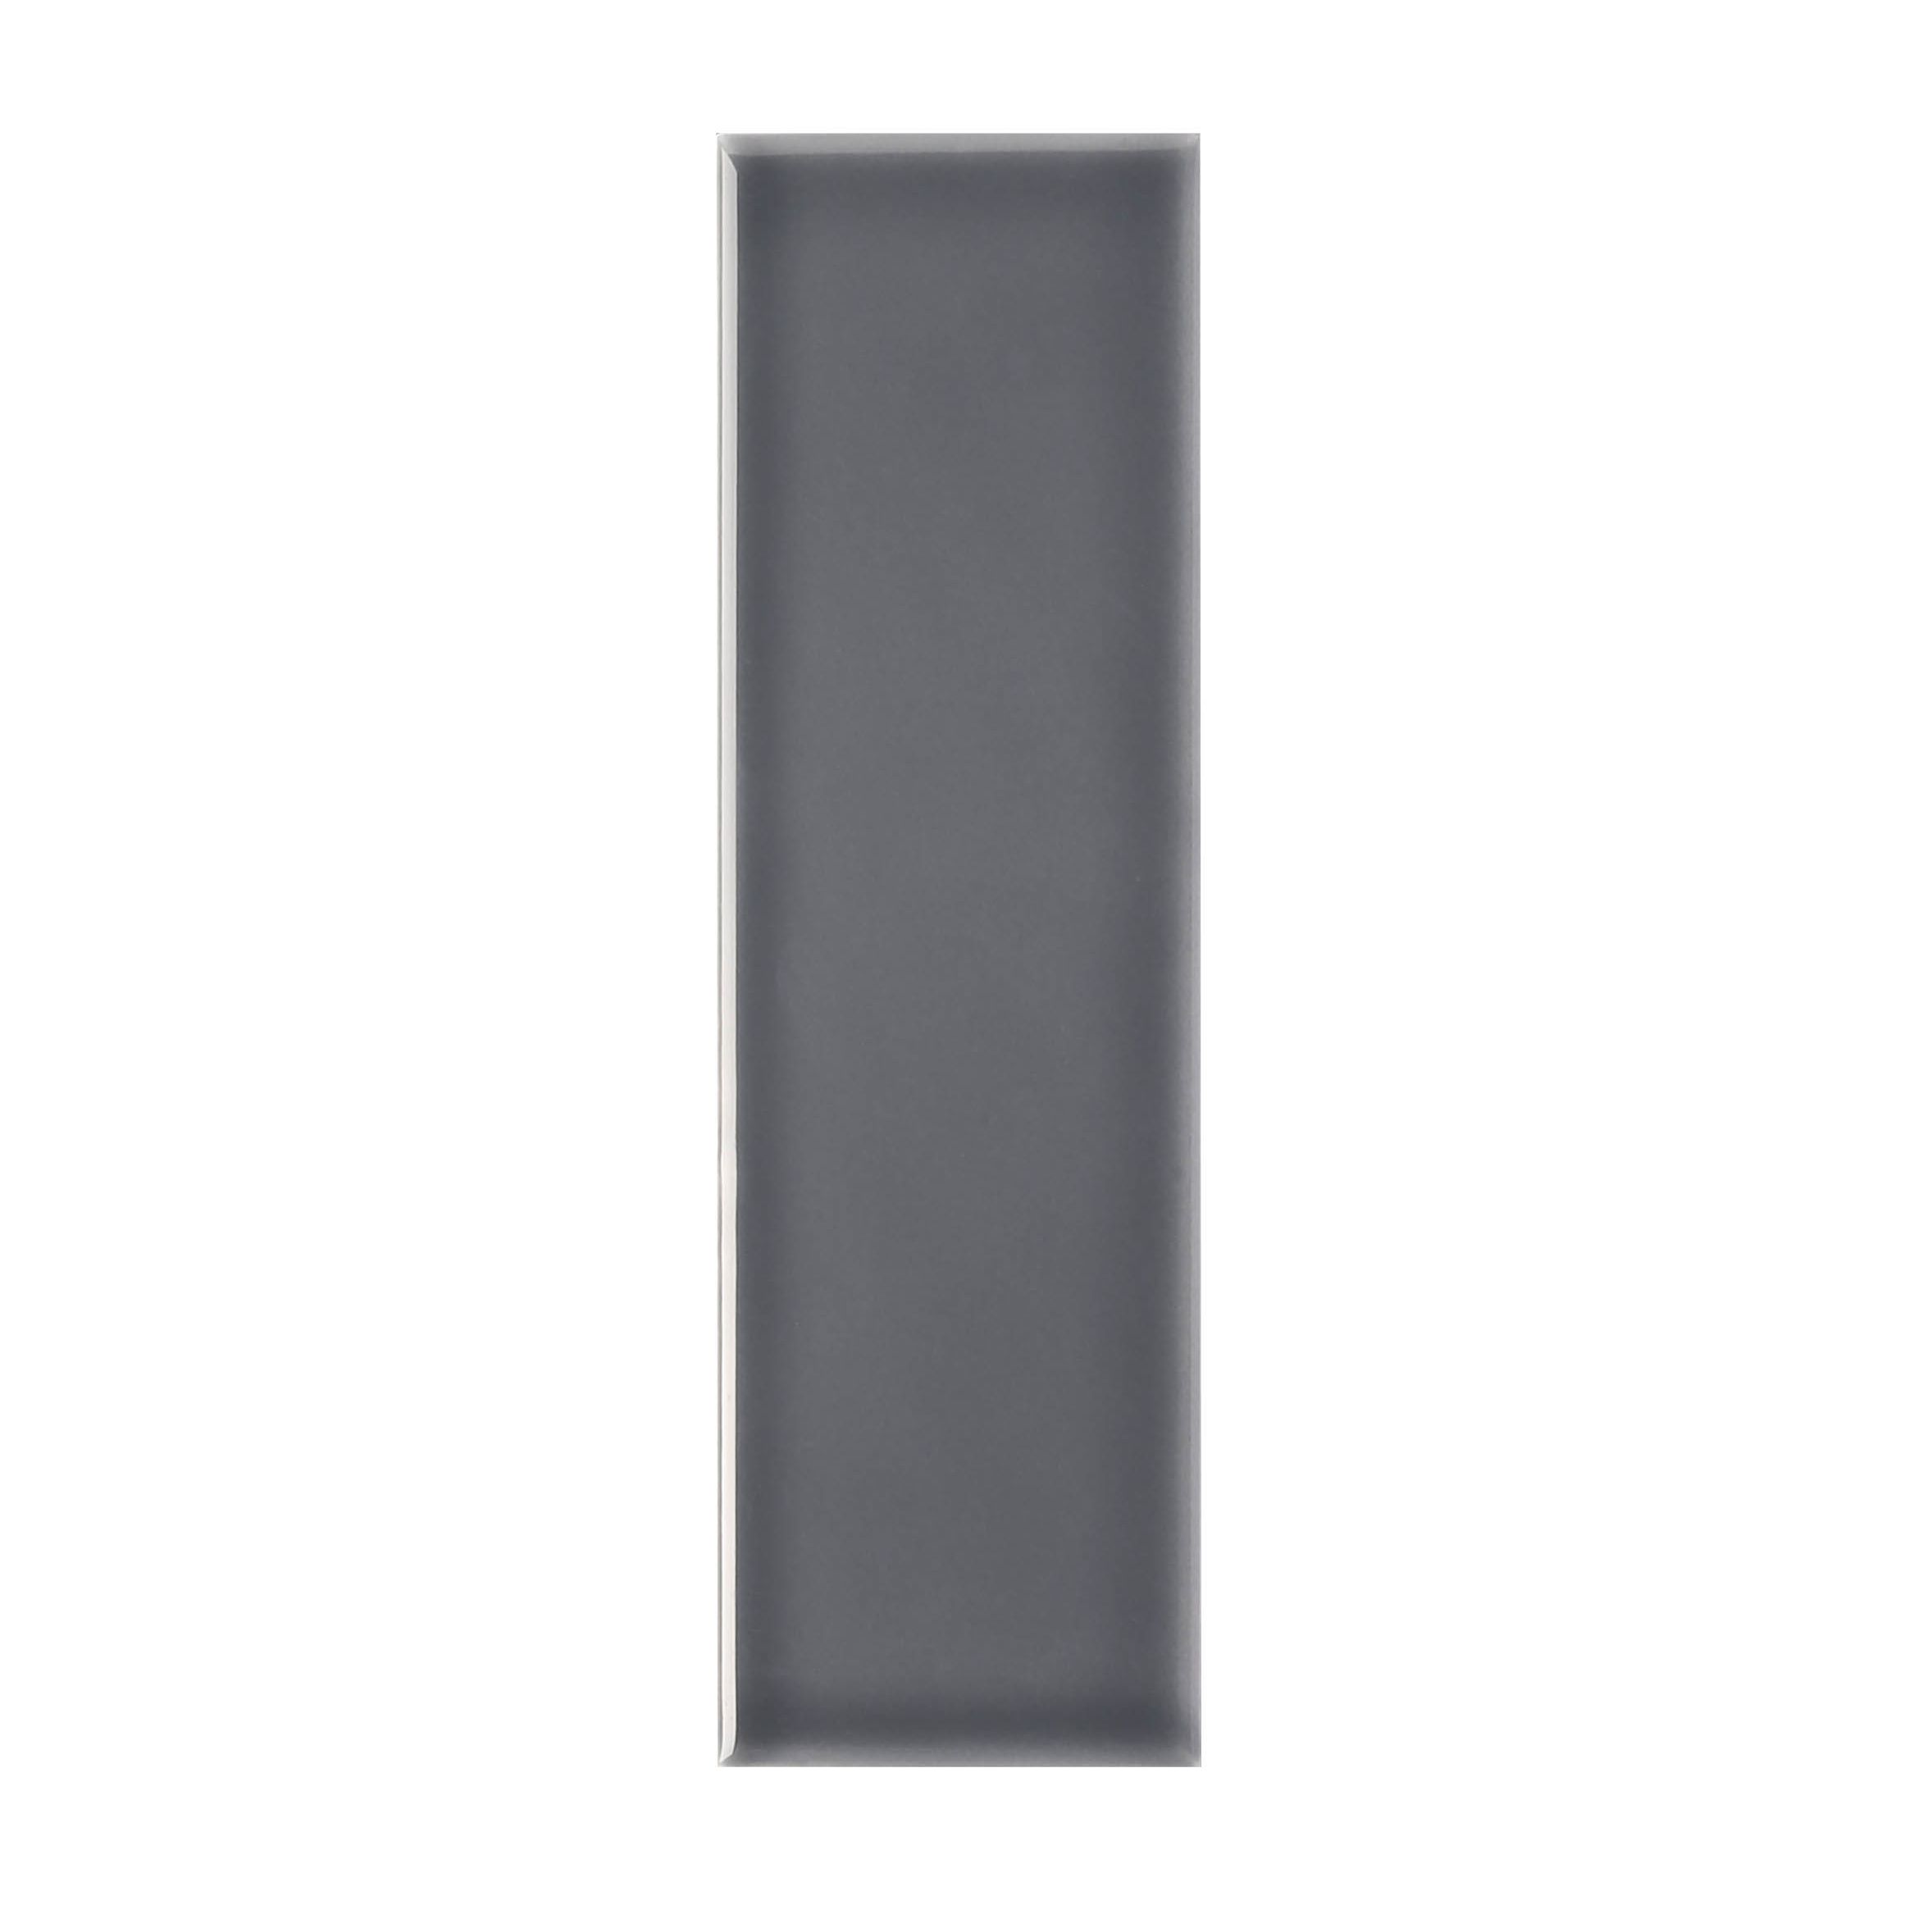 Johnson Tiles Mayfair Dark grey Gloss Ceramic Indoor Wall tile Sample